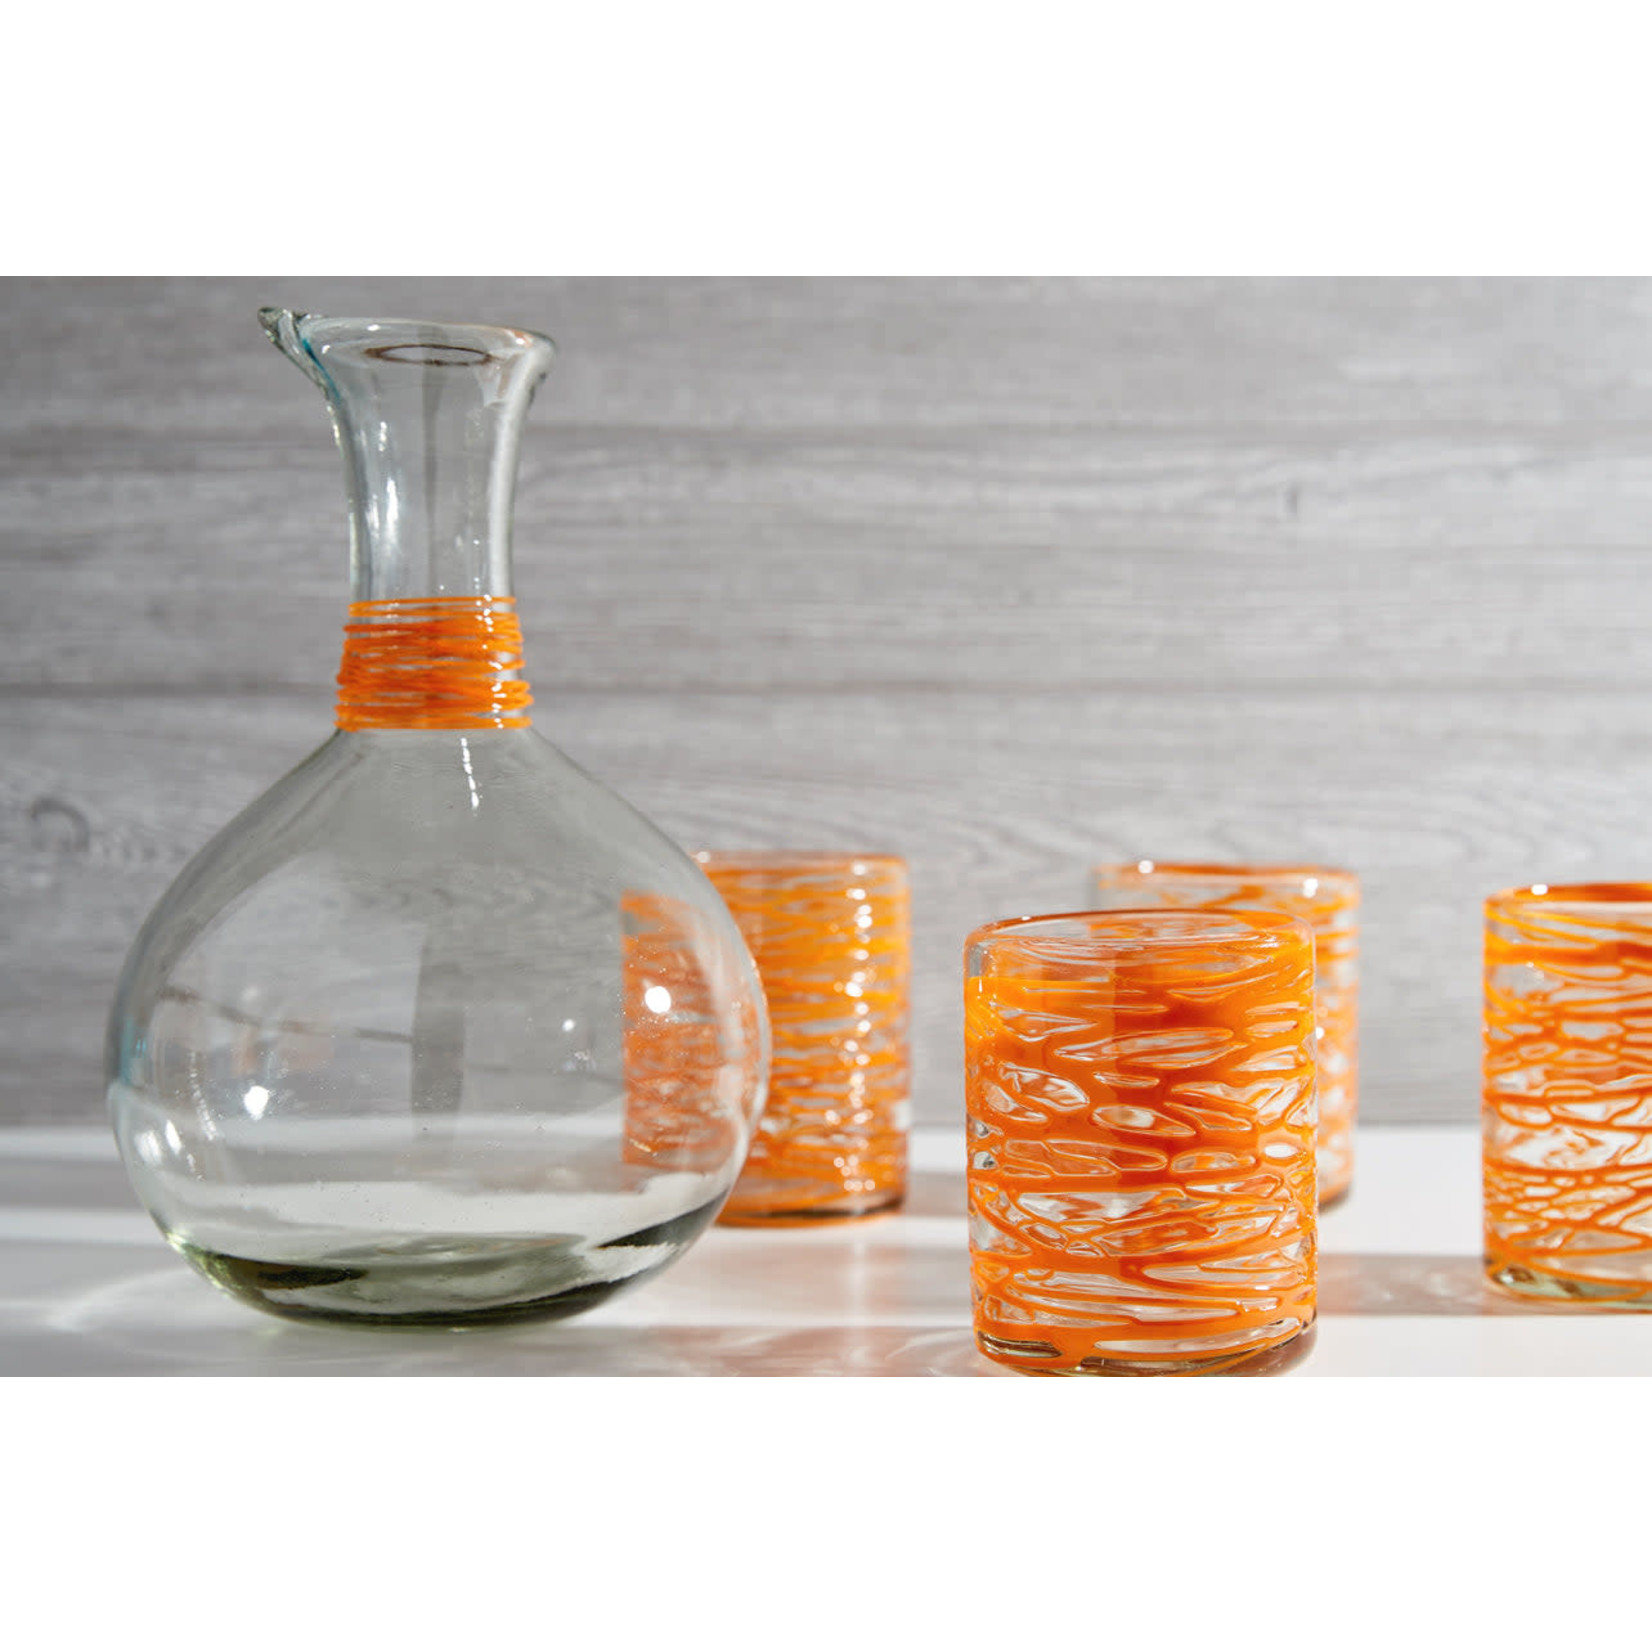 VERVE CULTURE VERVE Handblown Glass Carafe Orange DNR